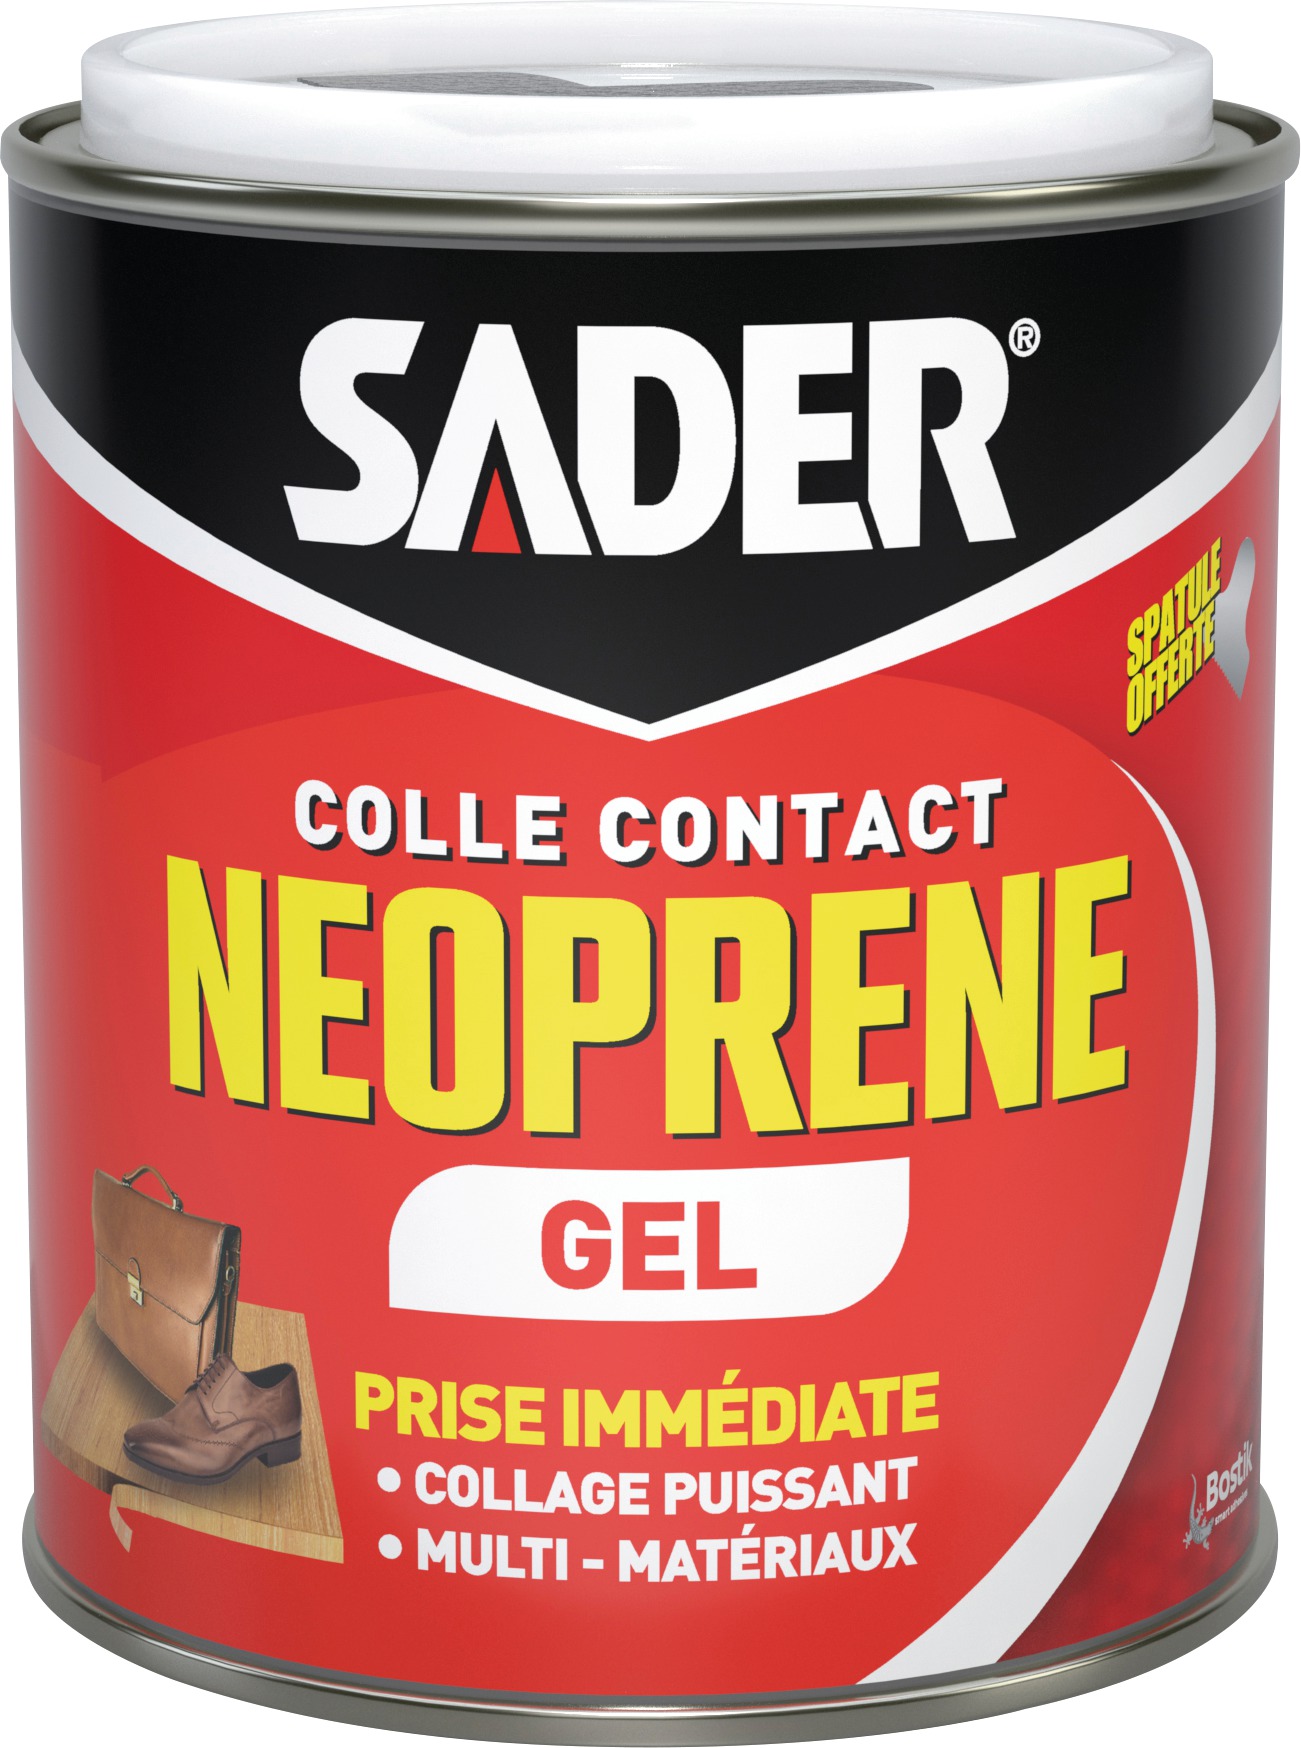 Colle contact néoprène gel Sader - Boîte métal avec spatule 750 ml